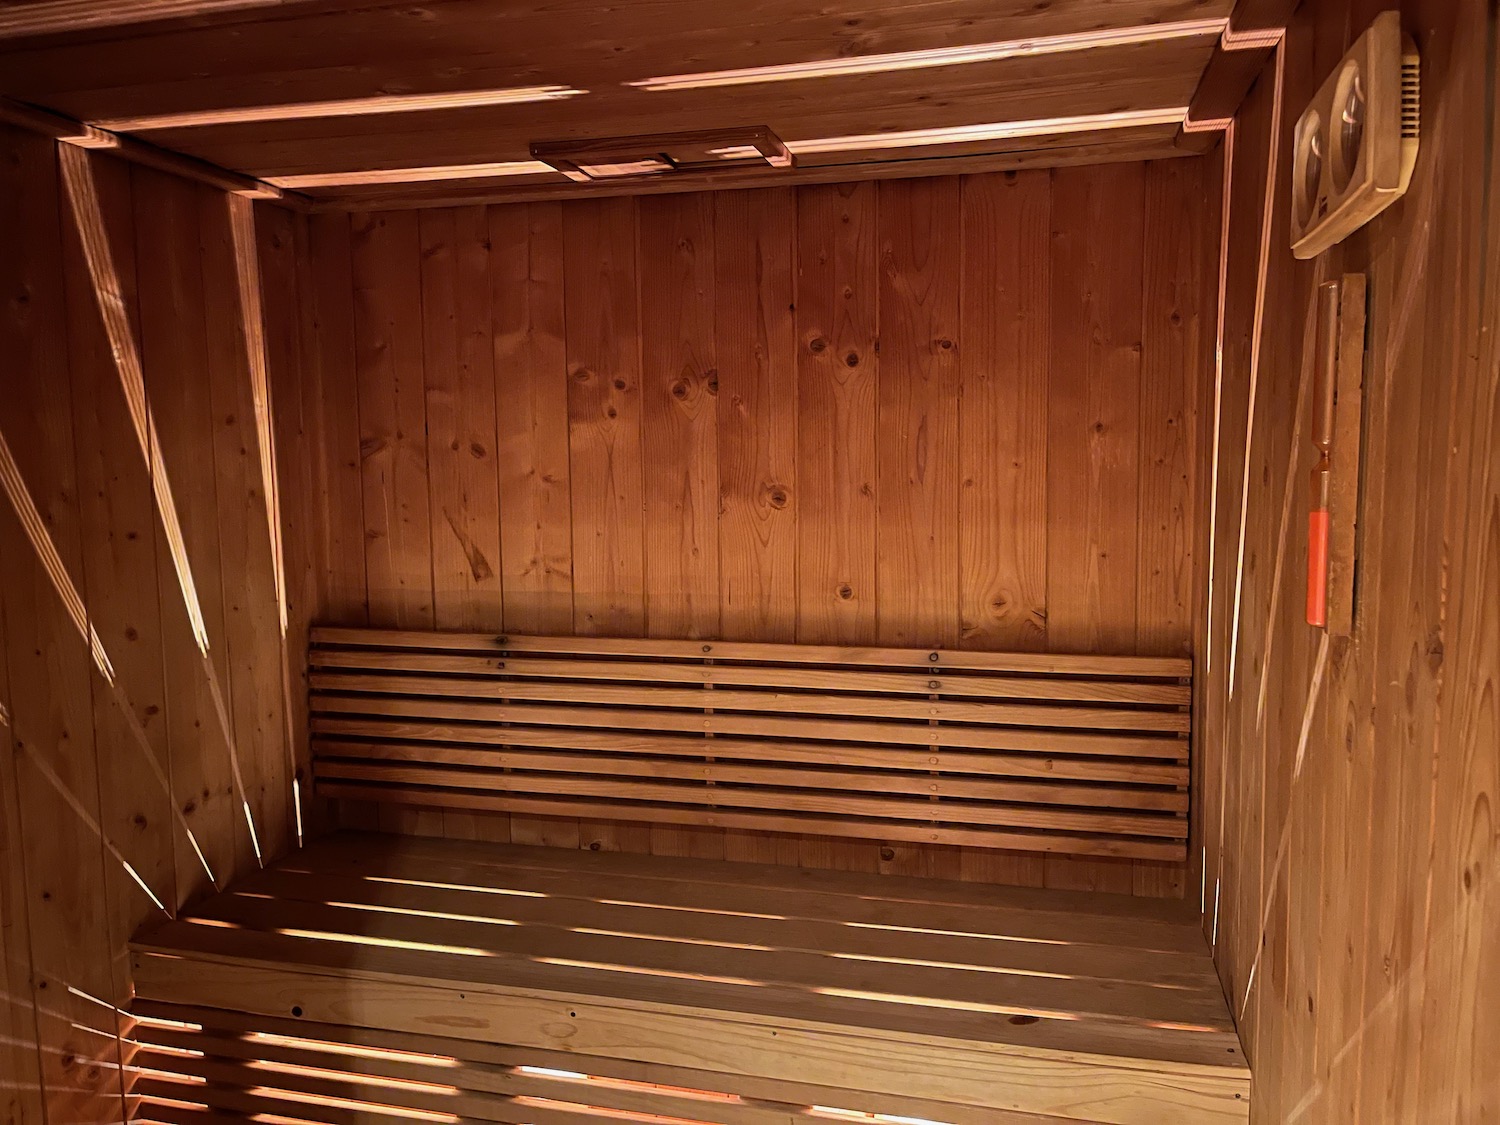 a wooden bench inside a wooden building